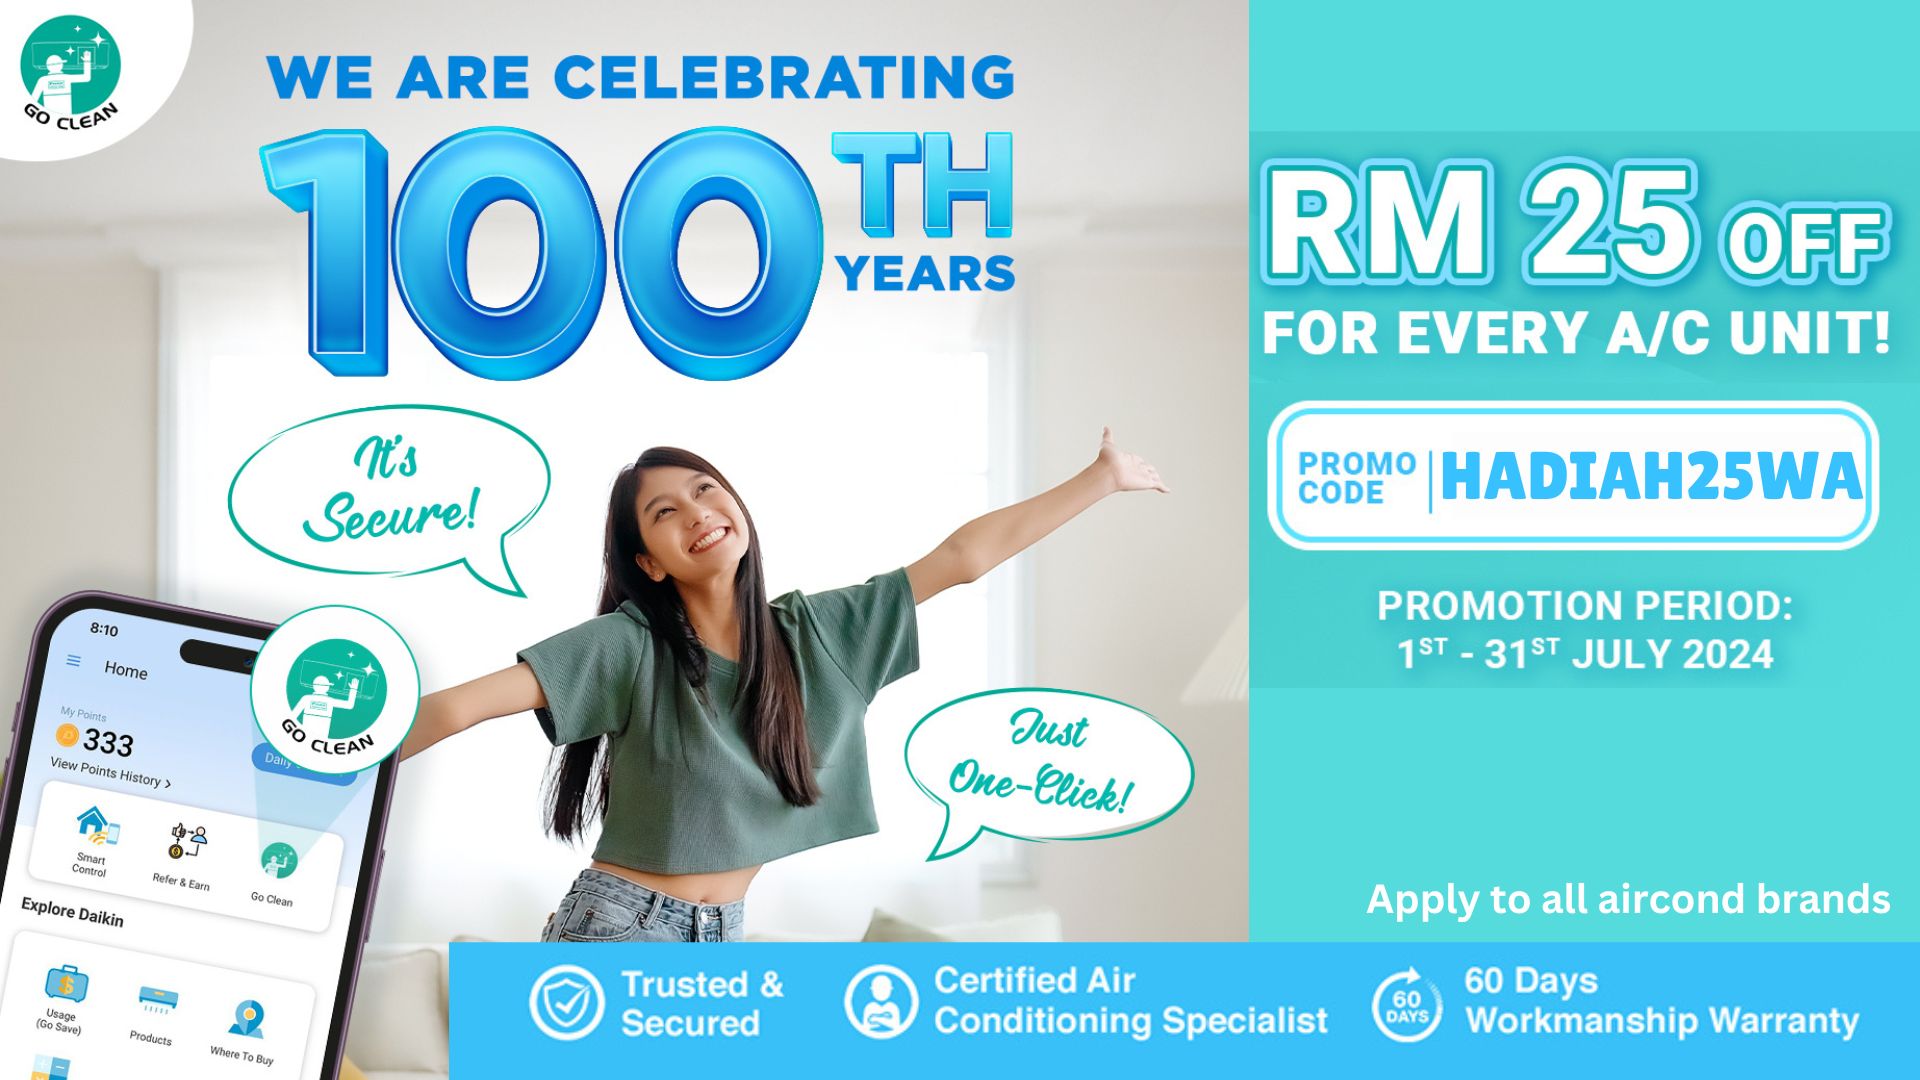 HADIAH25WA Get RM25 Off For Every Unit | Daikin Malaysia